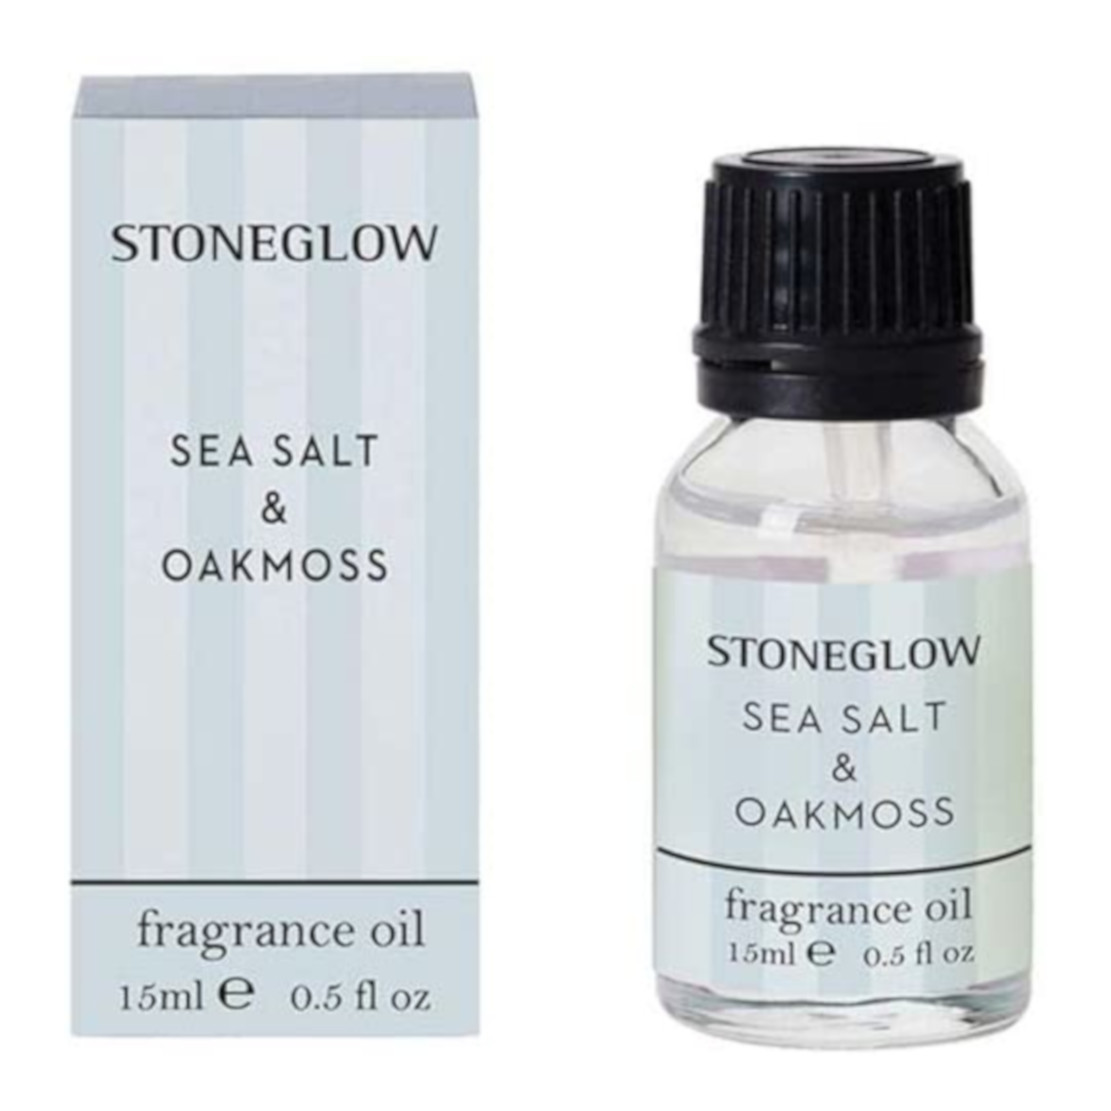 Stoneglow Sea Salt & Oakmoss Fragrance Oil 15ml